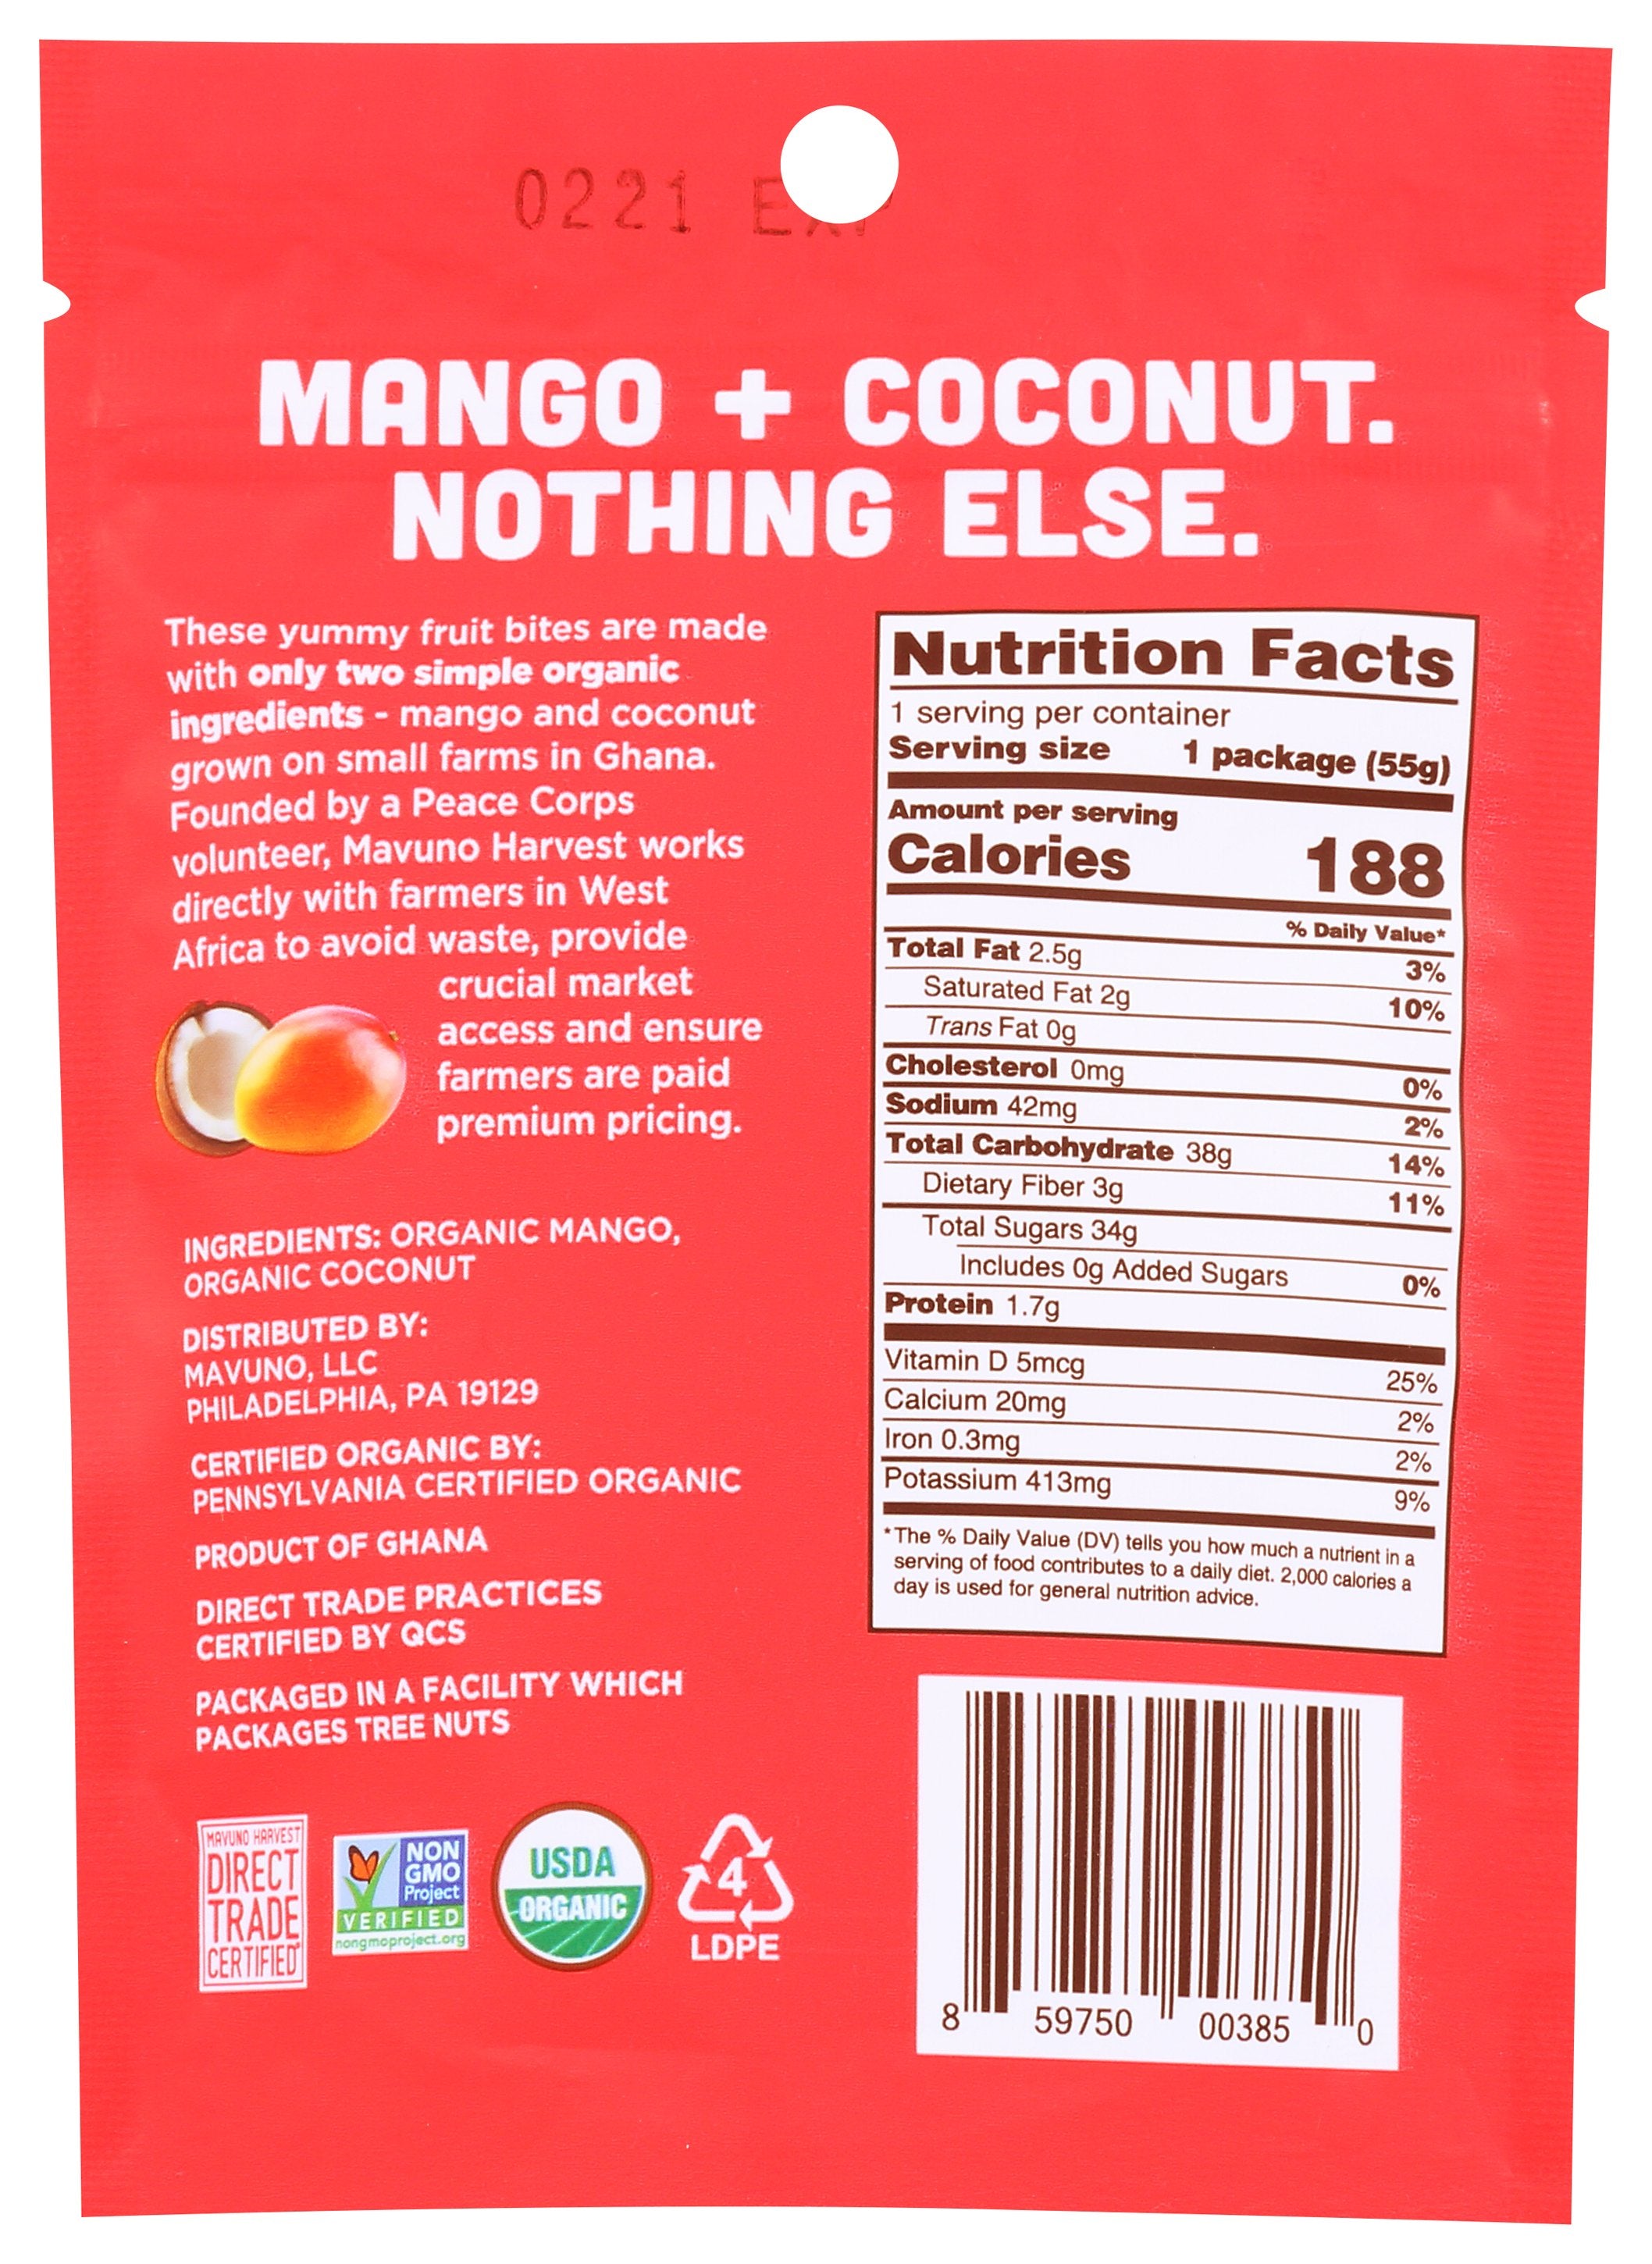 MAVUNO HARVEST BITES FRUIT MANGO COCONUT - Case of 8